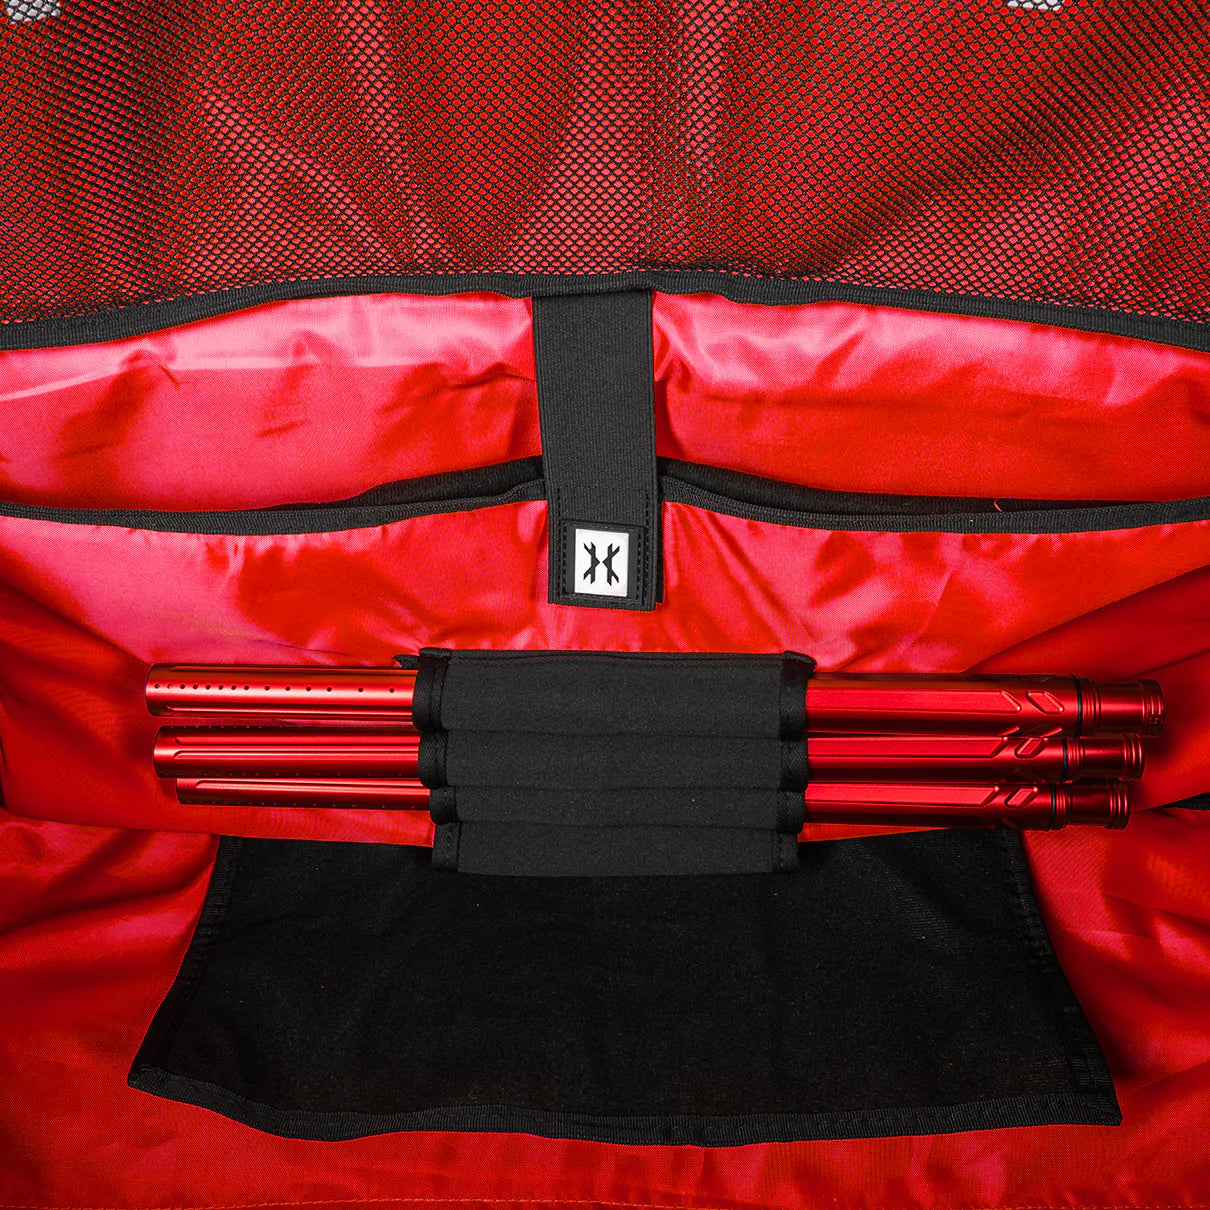 Expand 75L - Roller Gear Bag - Shroud Red | Paintball Gear Bag | Hk Army